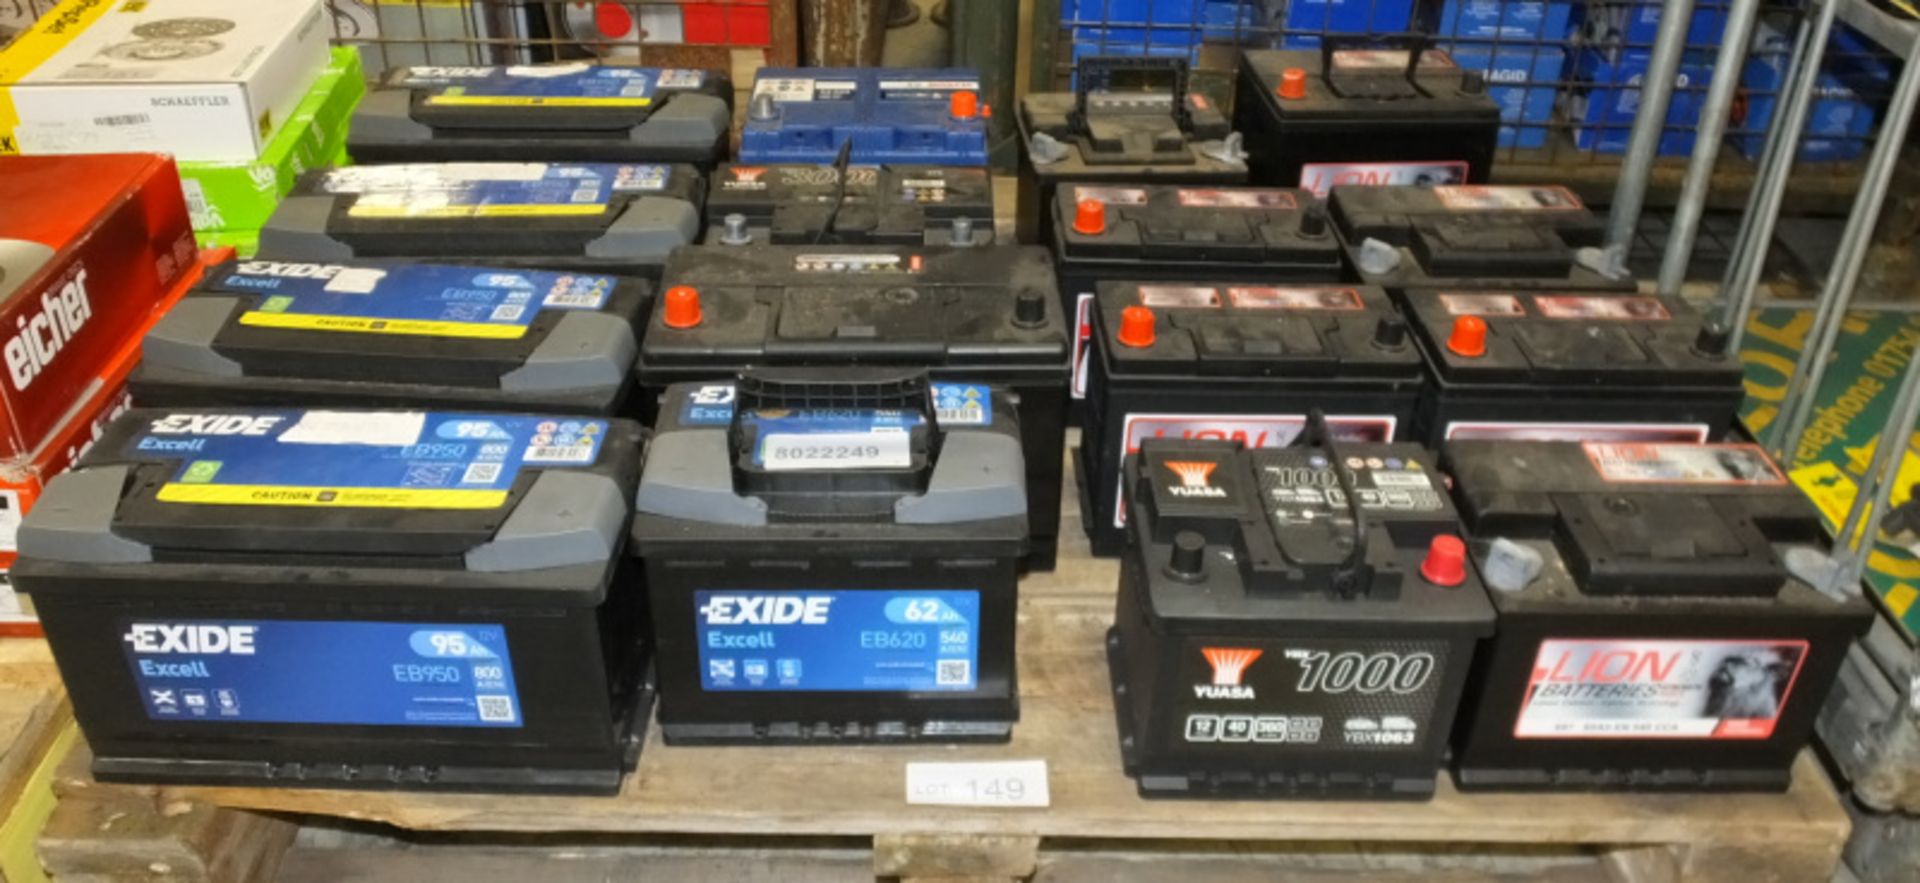 Various Vehicle Batteries - Lion 014 60Ah, 2xLion 097 60Ah, 3x Lion 038 45Ah, Yuasa 1000